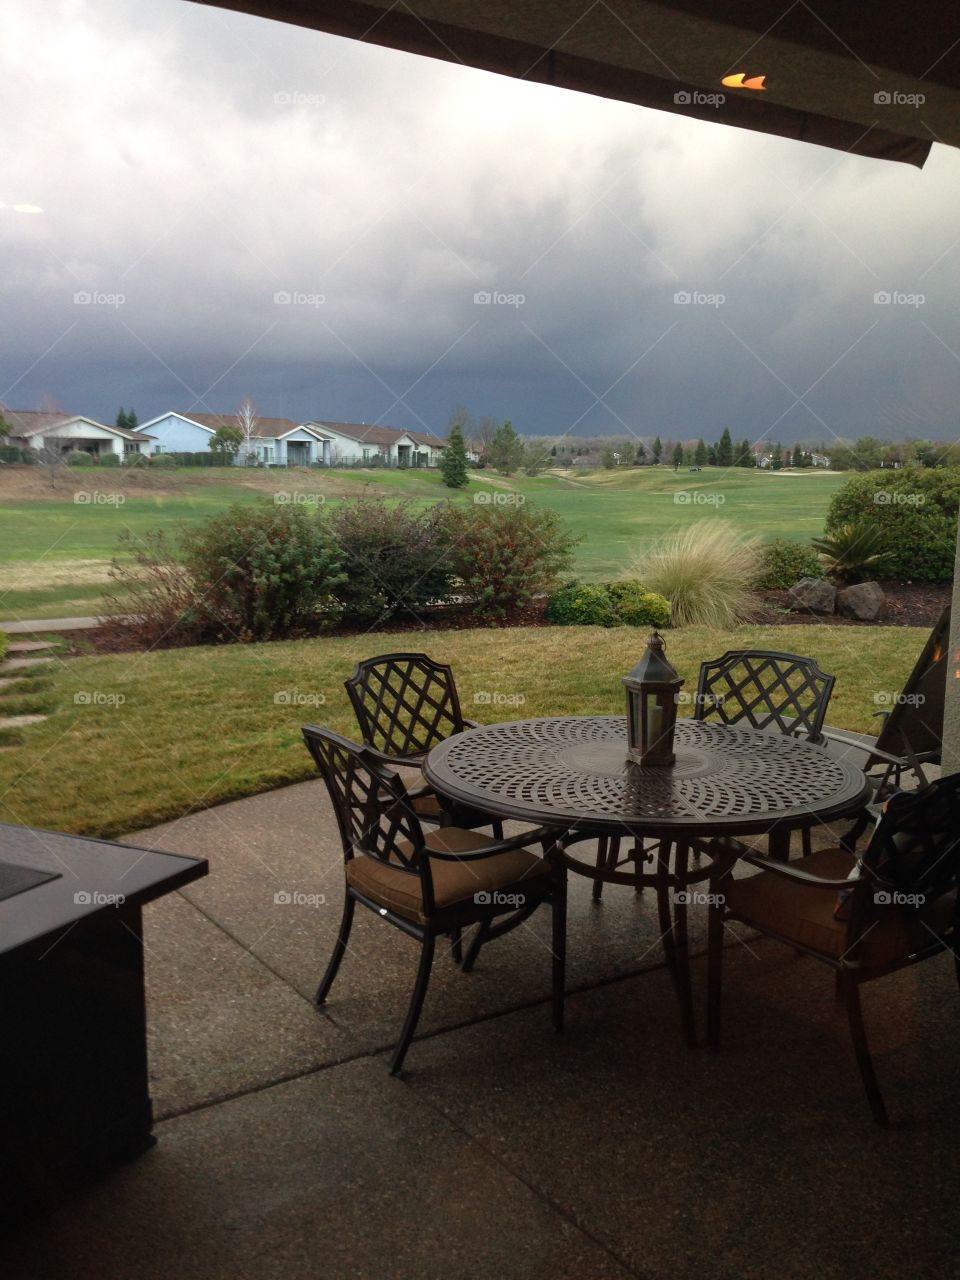 California Storm! No golf today.